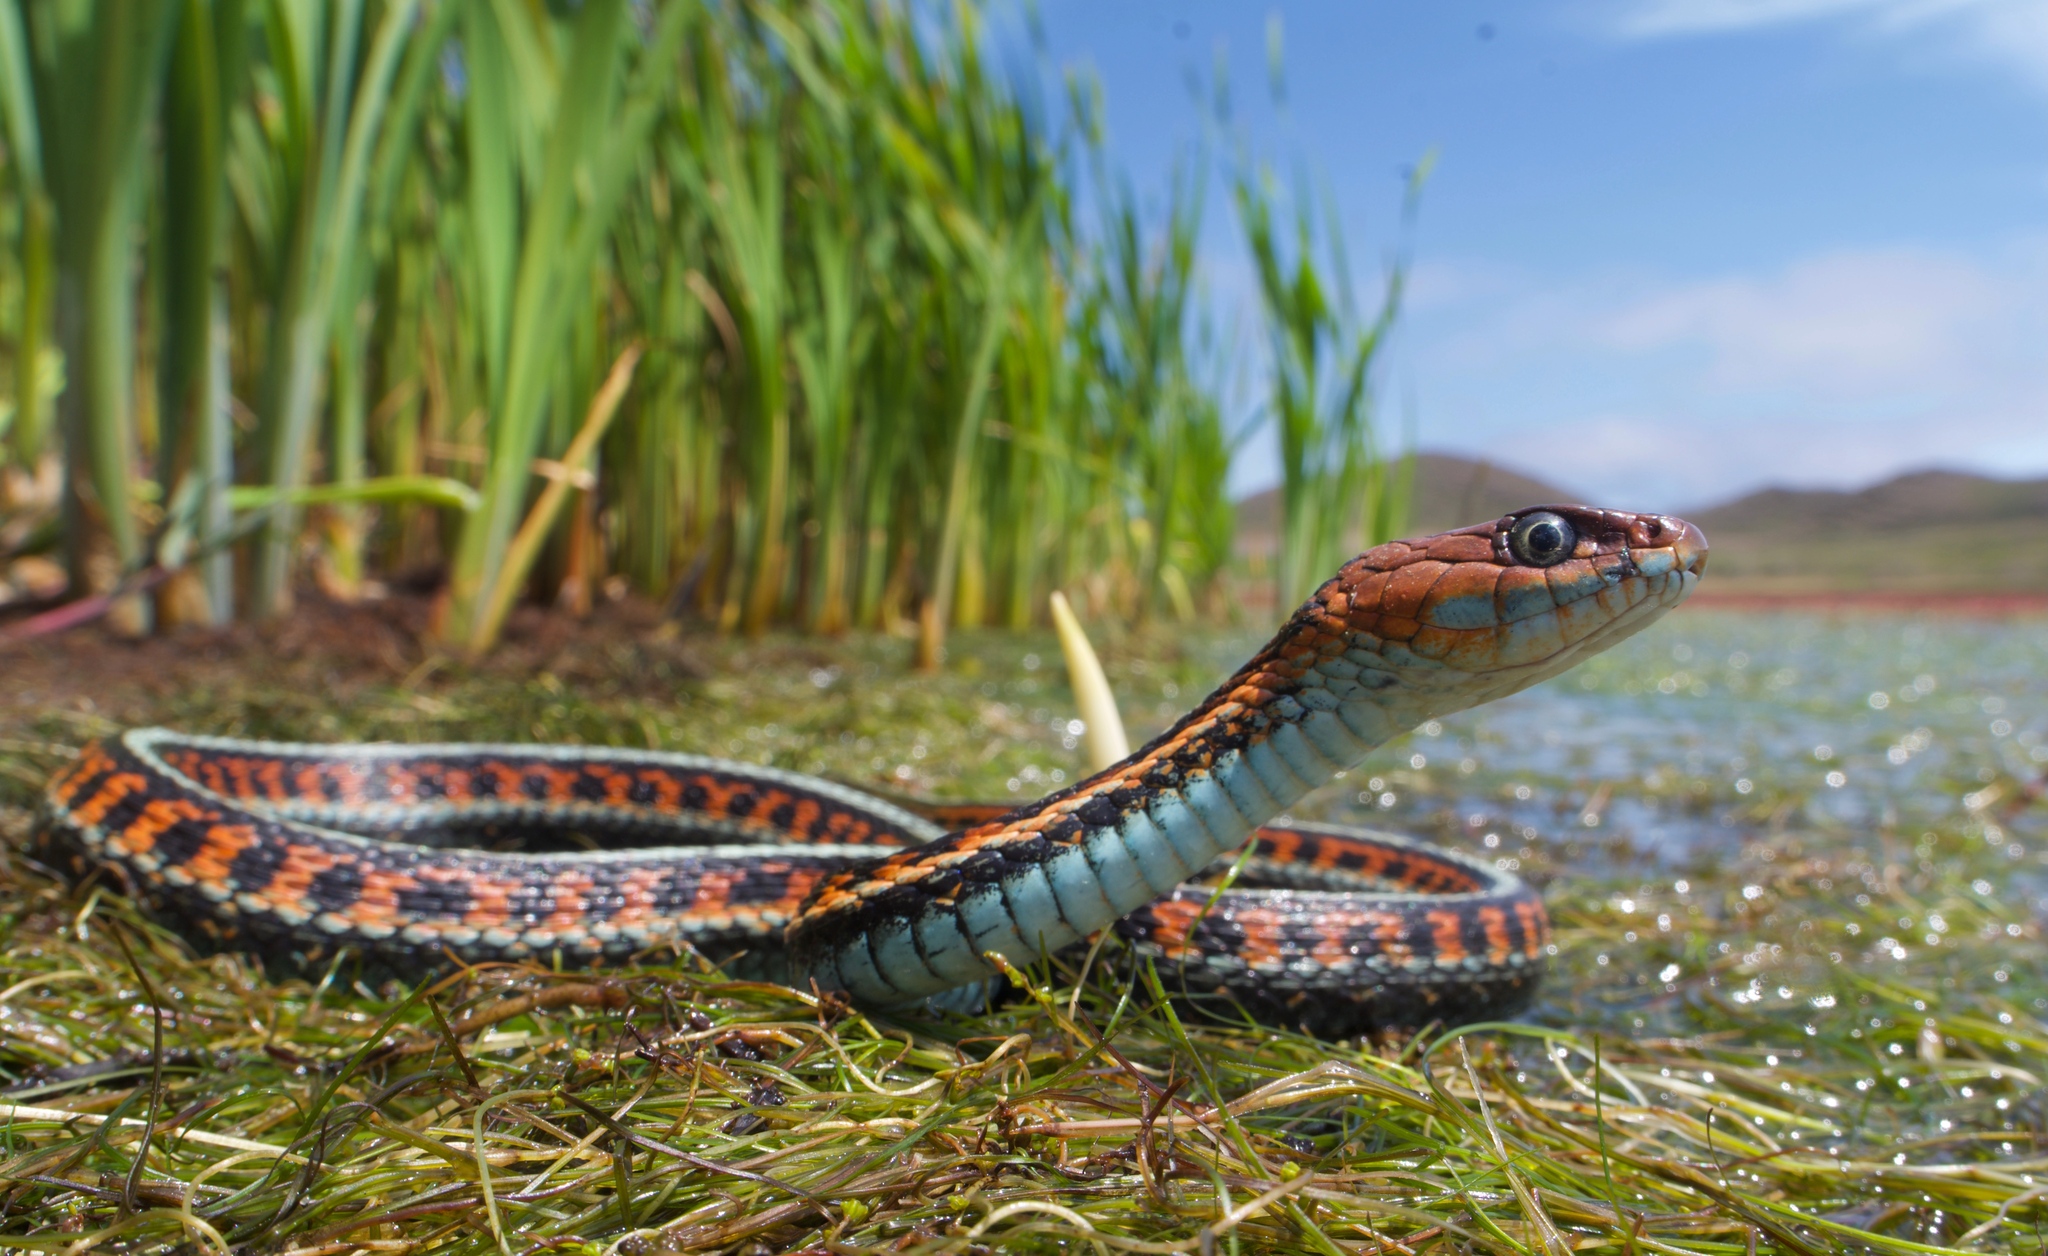 Common Garter Snake (Thamnophis sirtalis) · iNaturalist